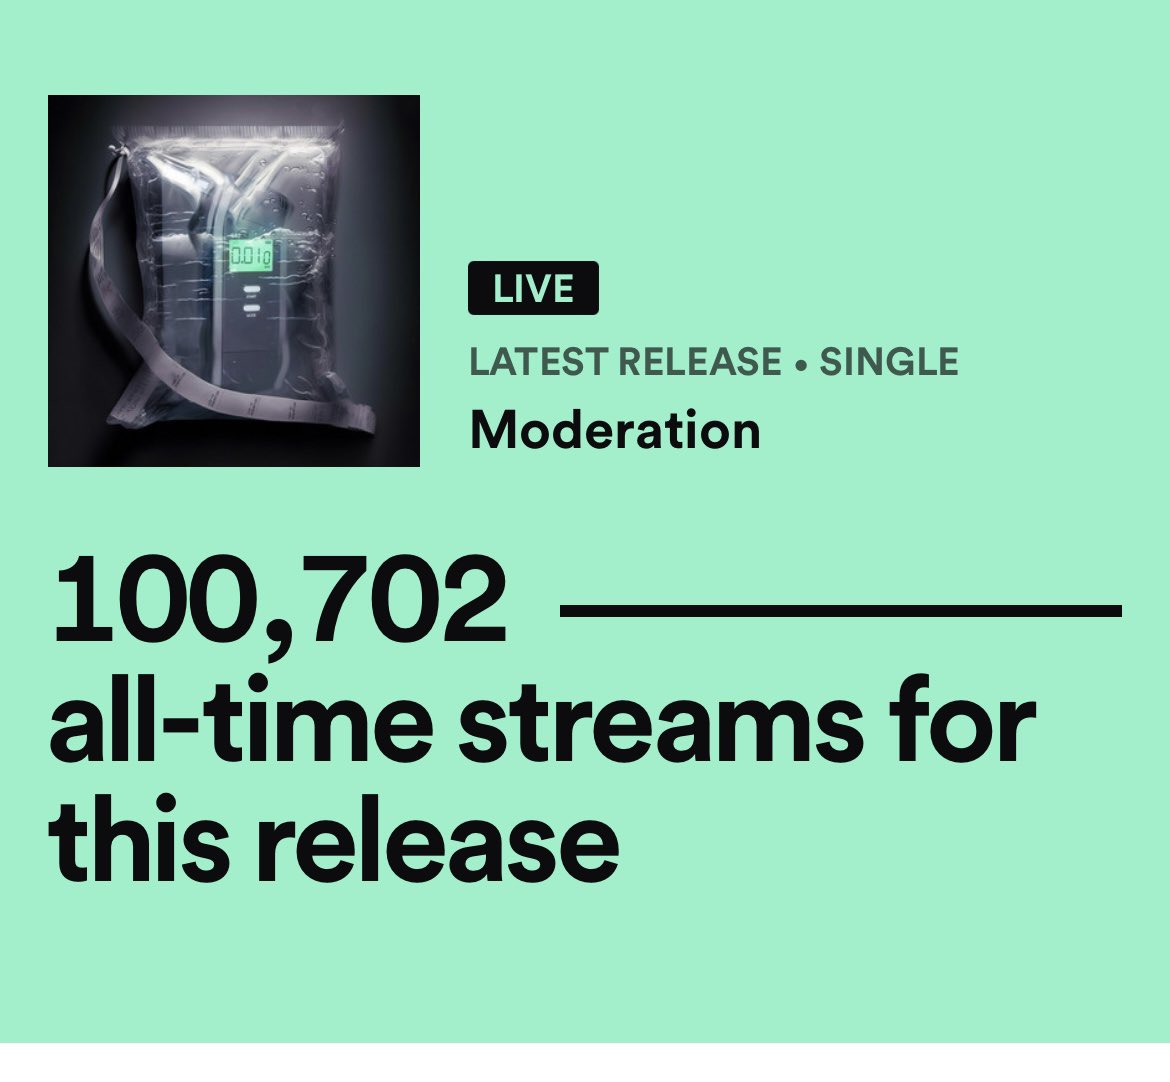 moderation already at 100k babyyyy thanks for listening